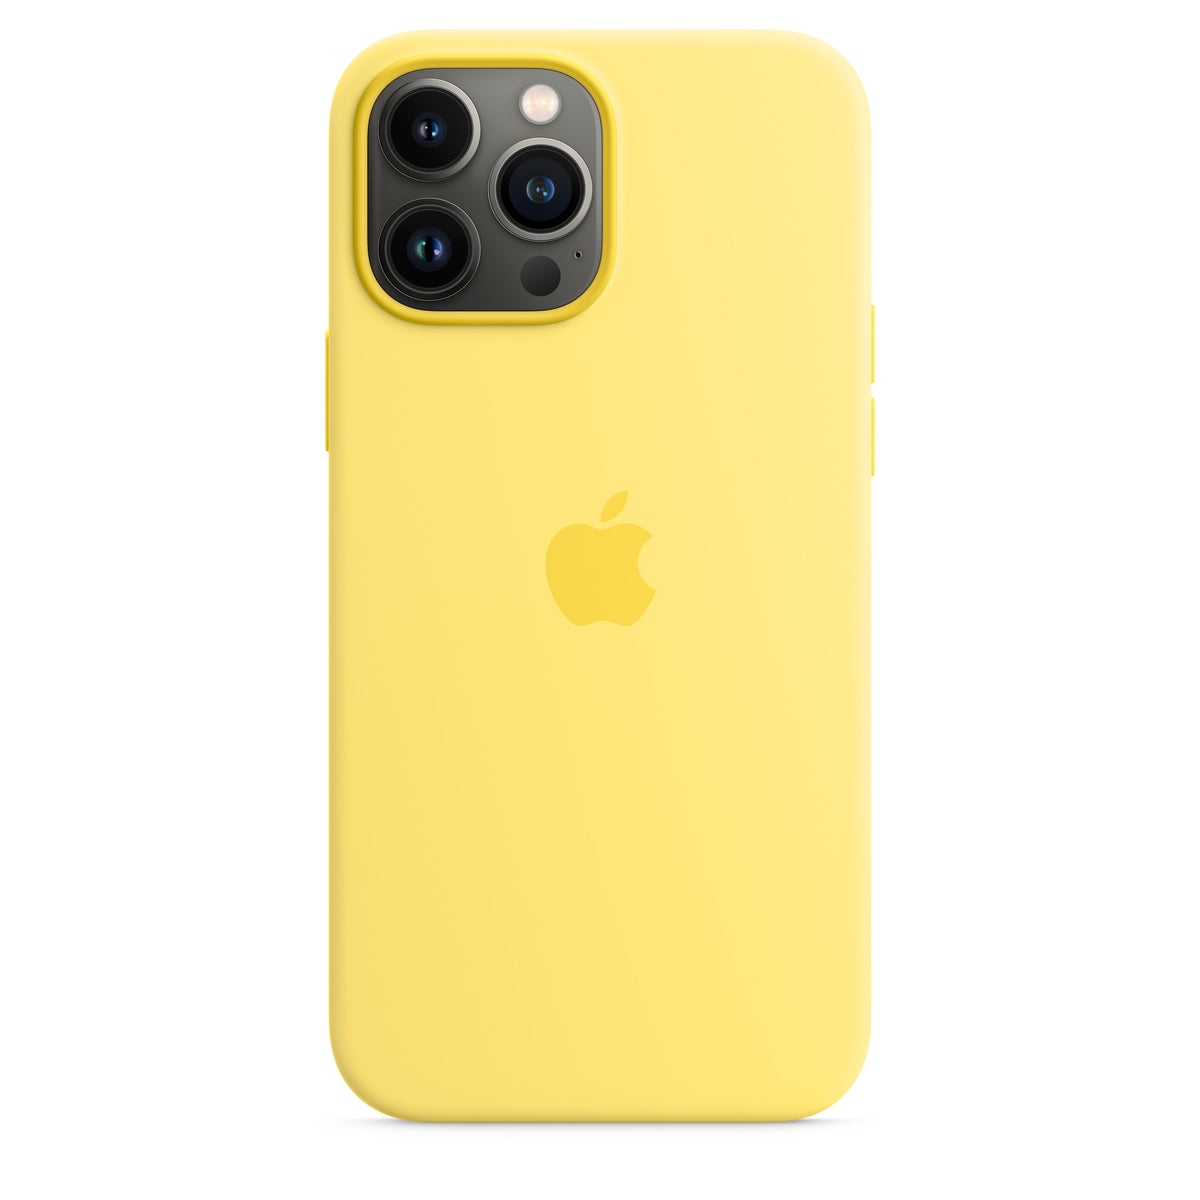 Coque en silicone avec MagSafe pour iPhone 12 mini - Bleu tendre - Apple  (FR)